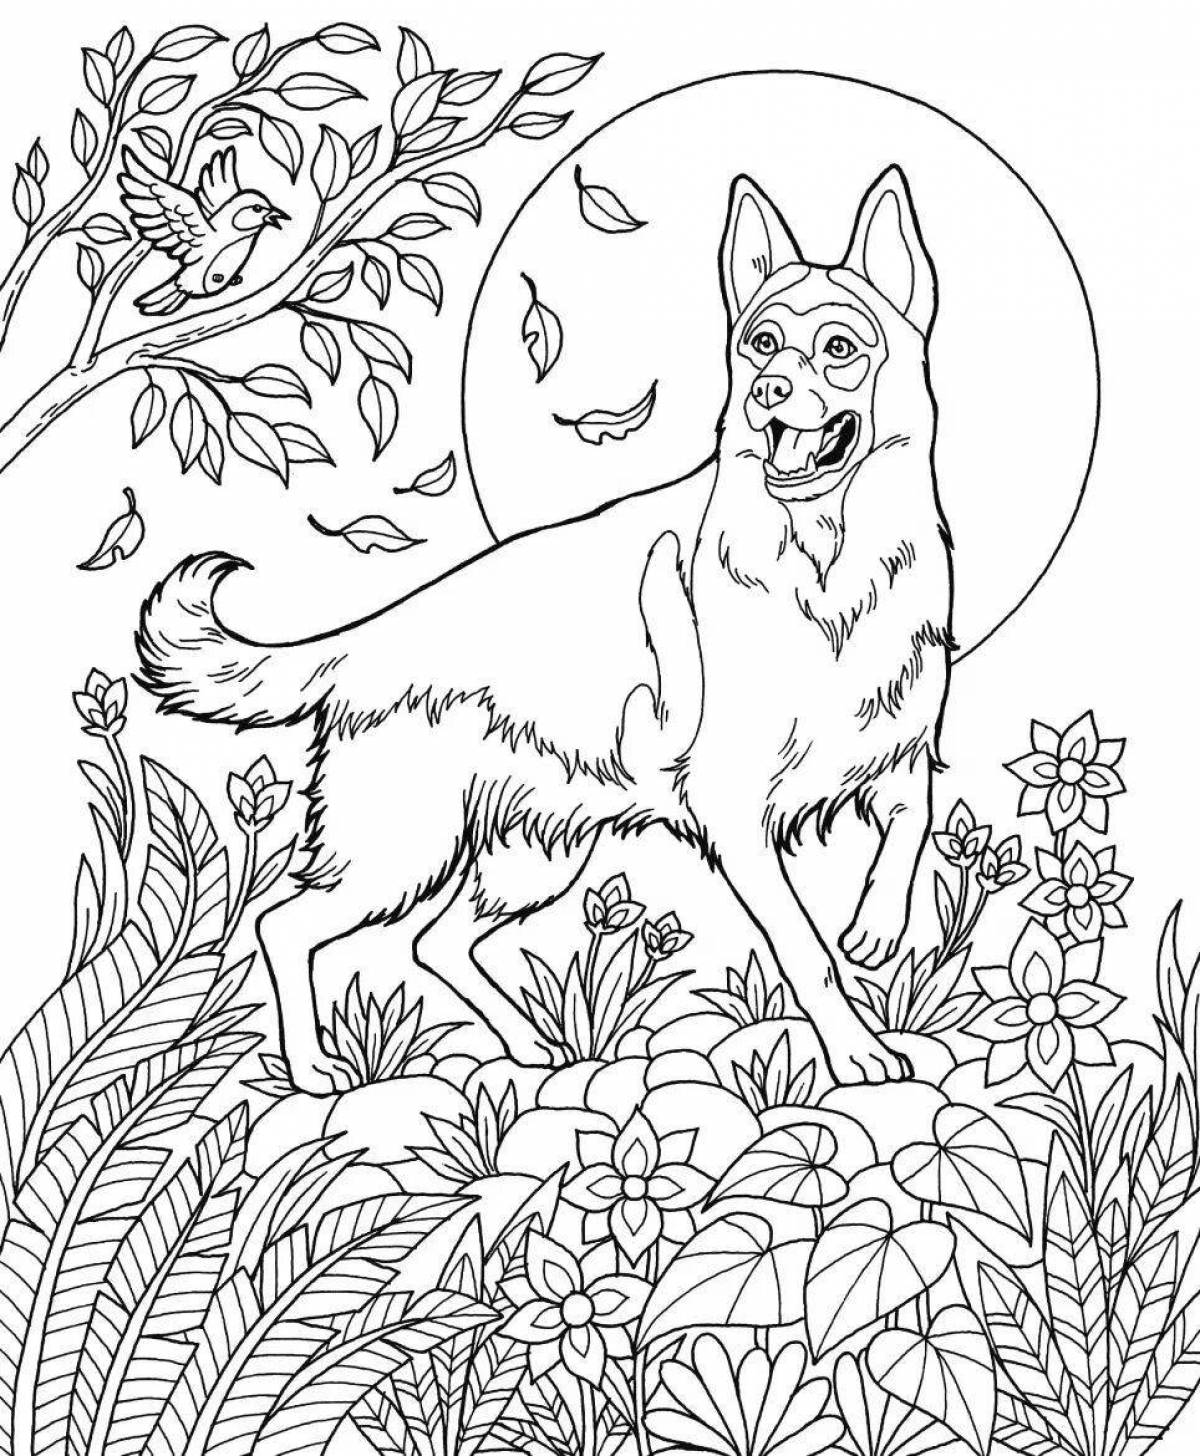 Coloring book of a joyful German Shepherd puppy